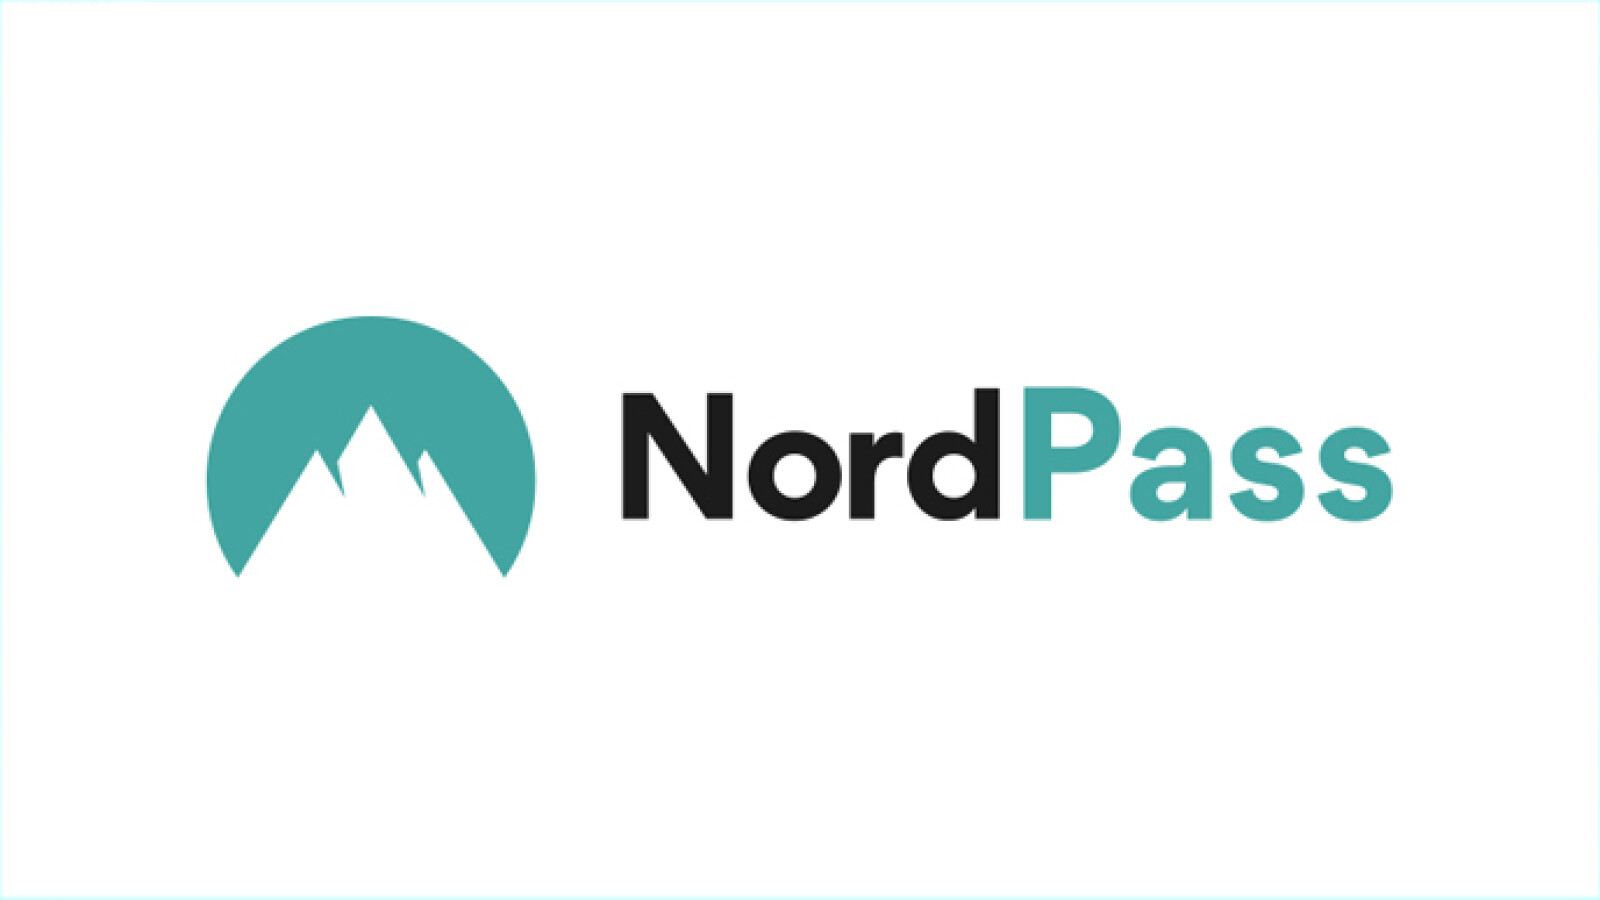 nordpass free with nordvpn